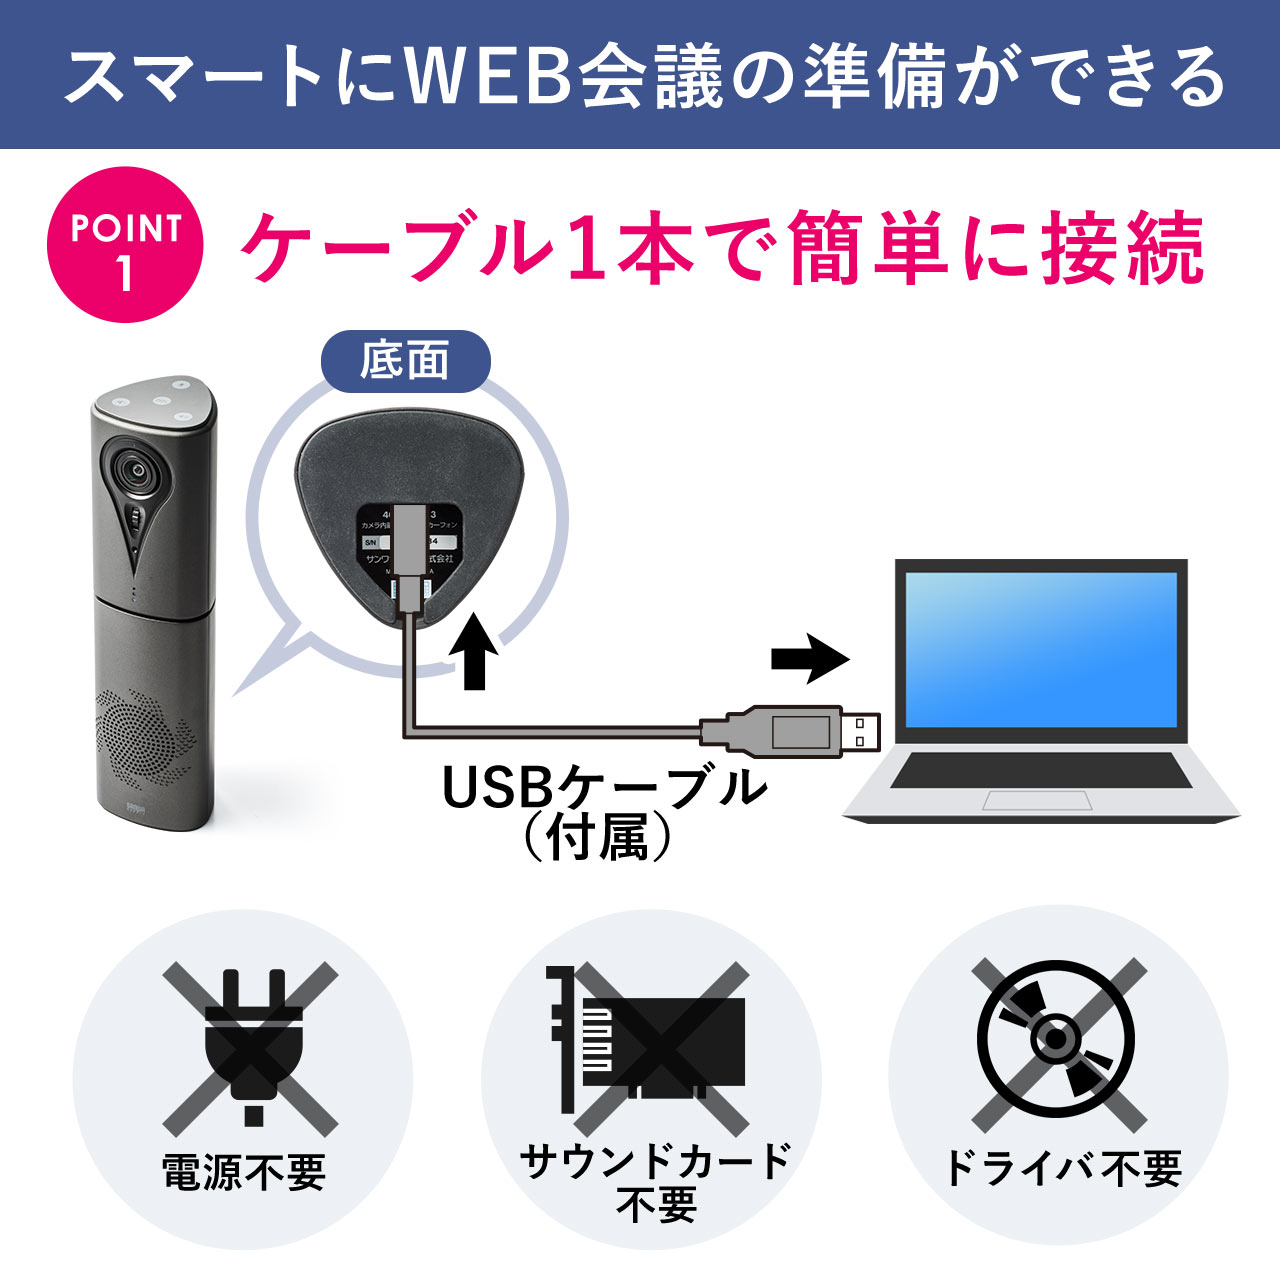 JWEBcXs[J[tH J Sw Xs[J[̌^ tHD USB zoom Skype Teams 400-MC013